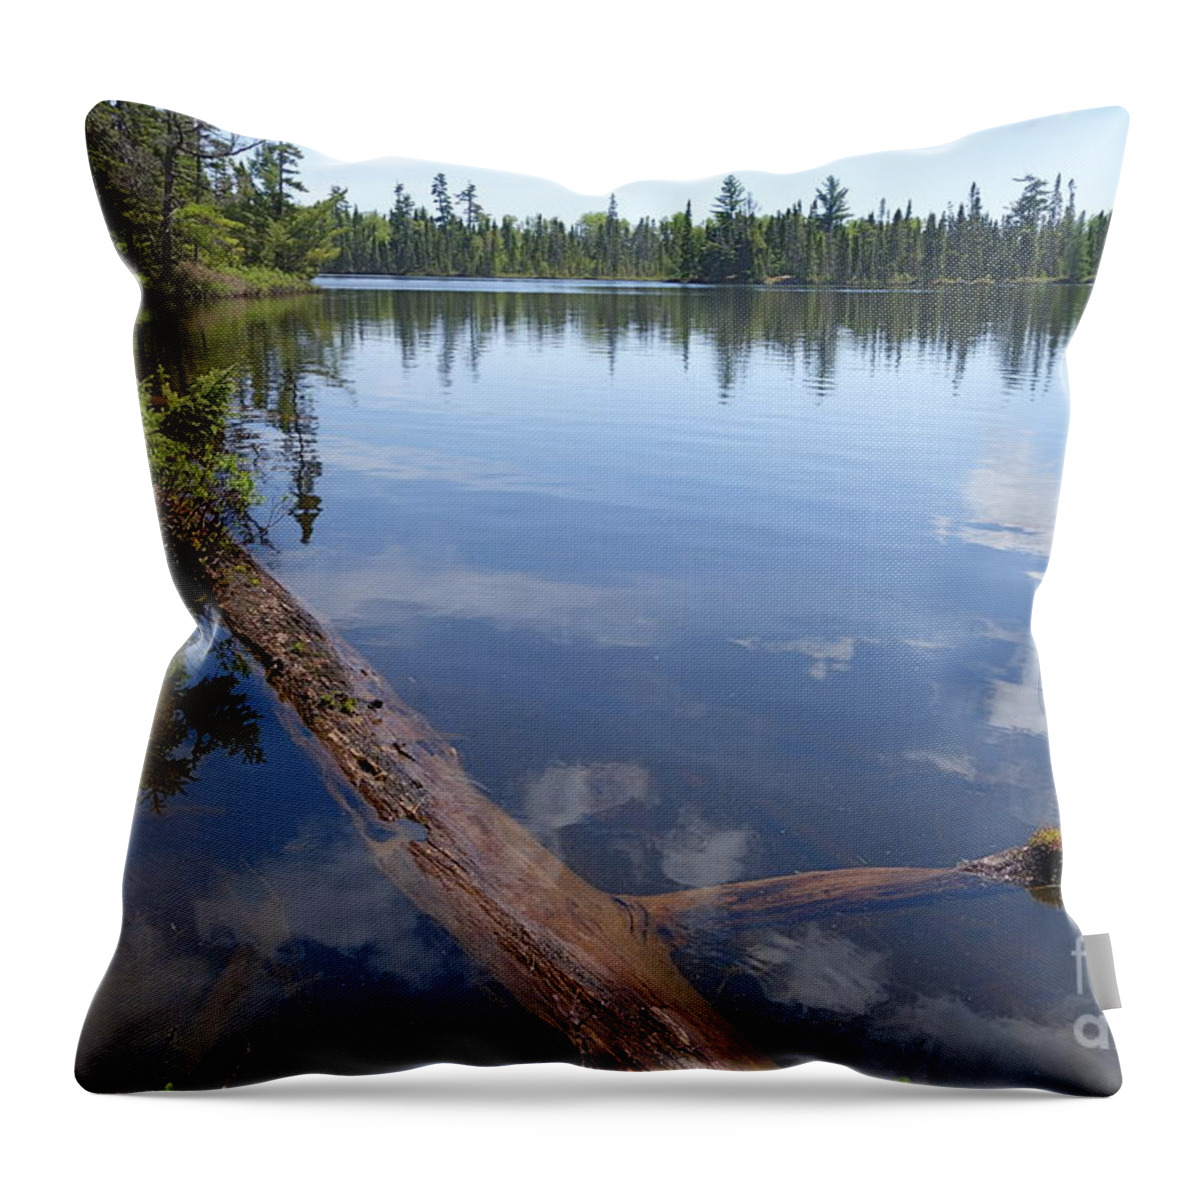 Northern Minnesota Lake Throw Pillow featuring the photograph Shoe Lake by Sandra Updyke